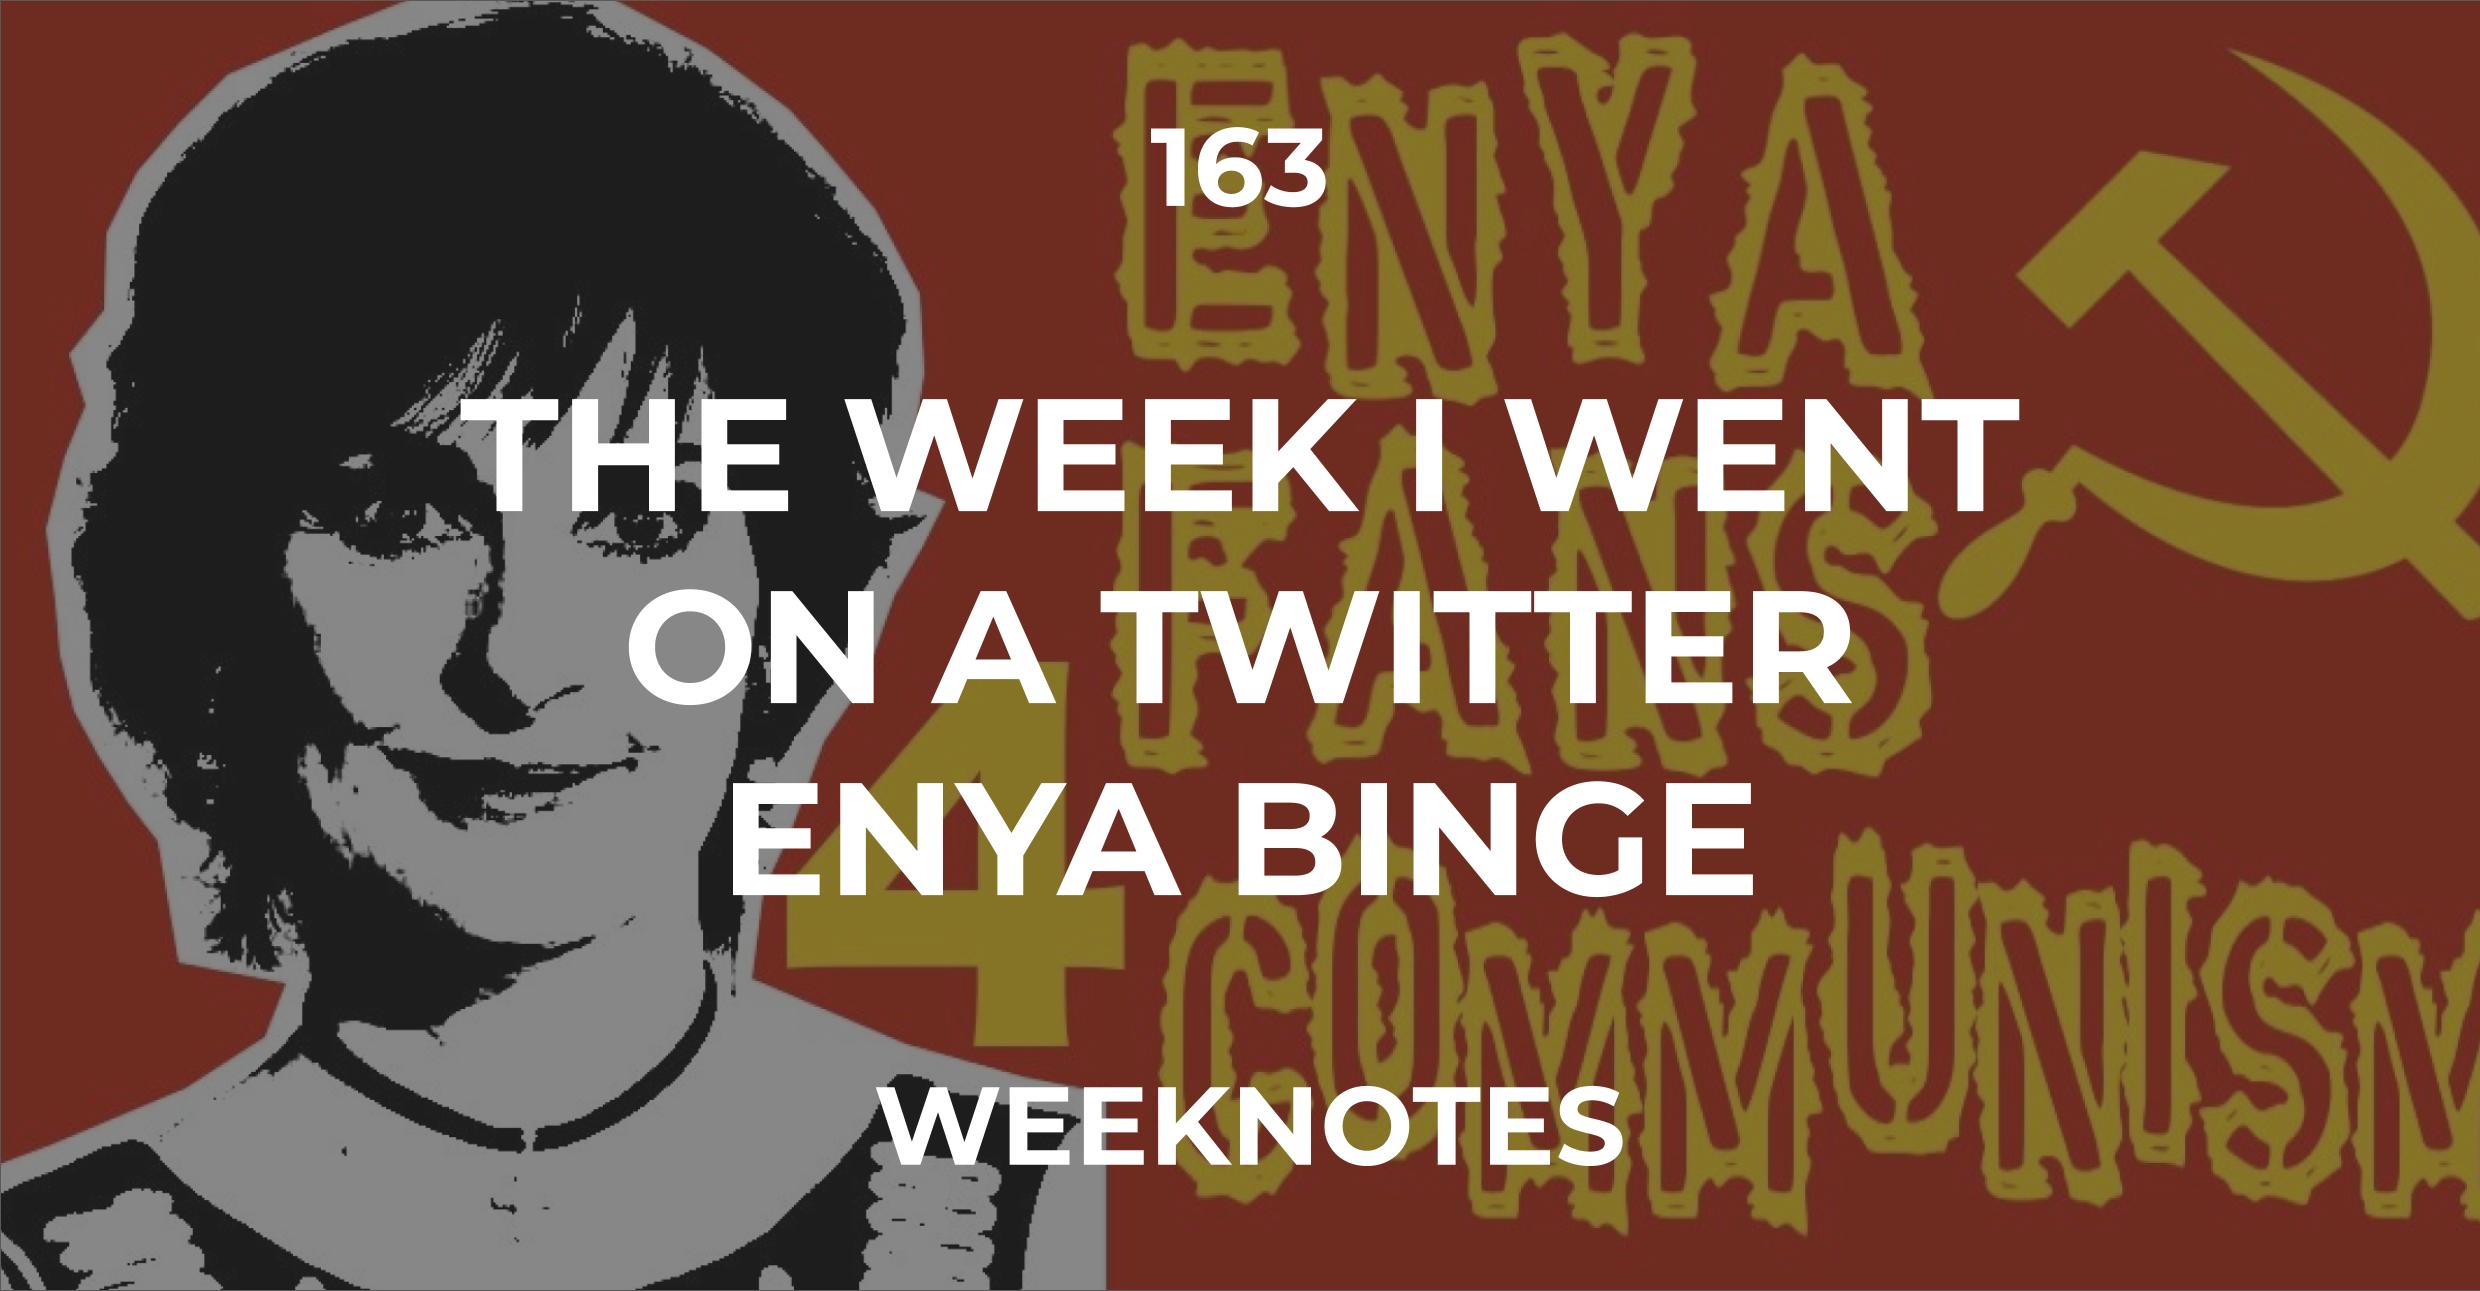 The Week I Went On A Twitter Enya Binge